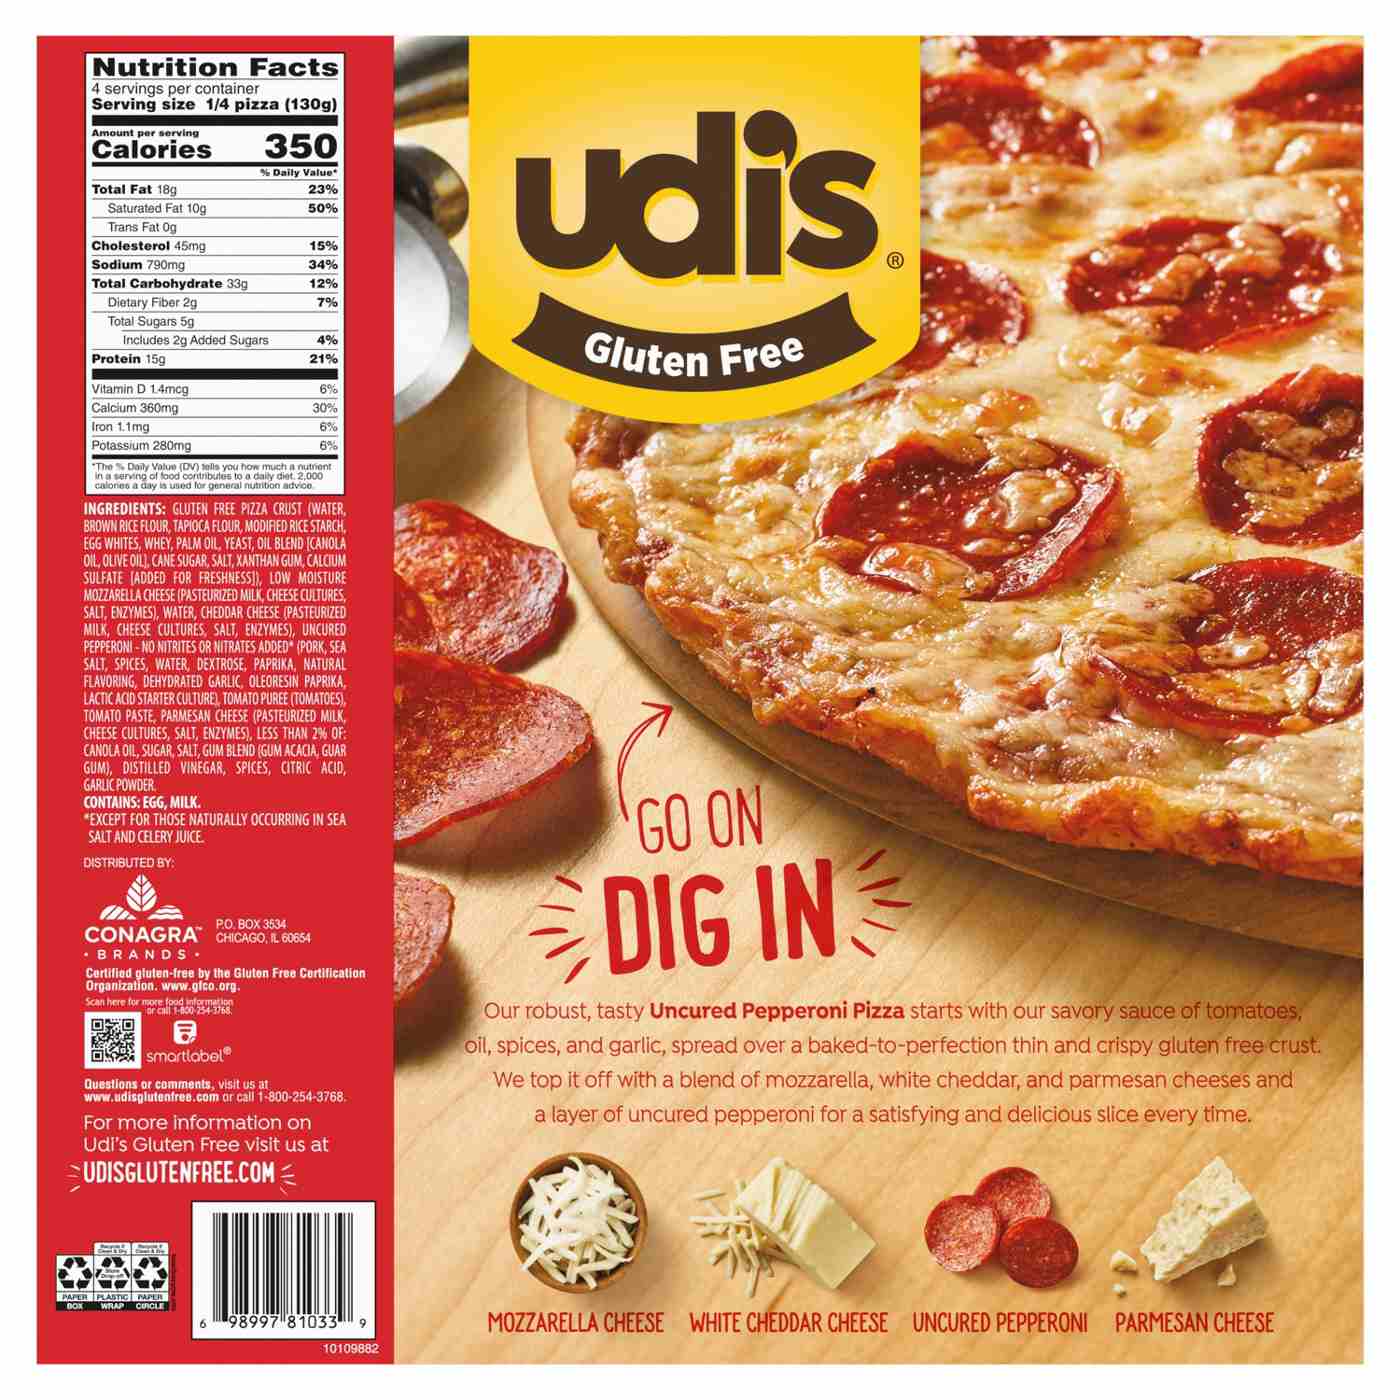 Udi's Gluten-Free Crispy Thin Crust Frozen Pizza - Uncured Pepperoni; image 6 of 6